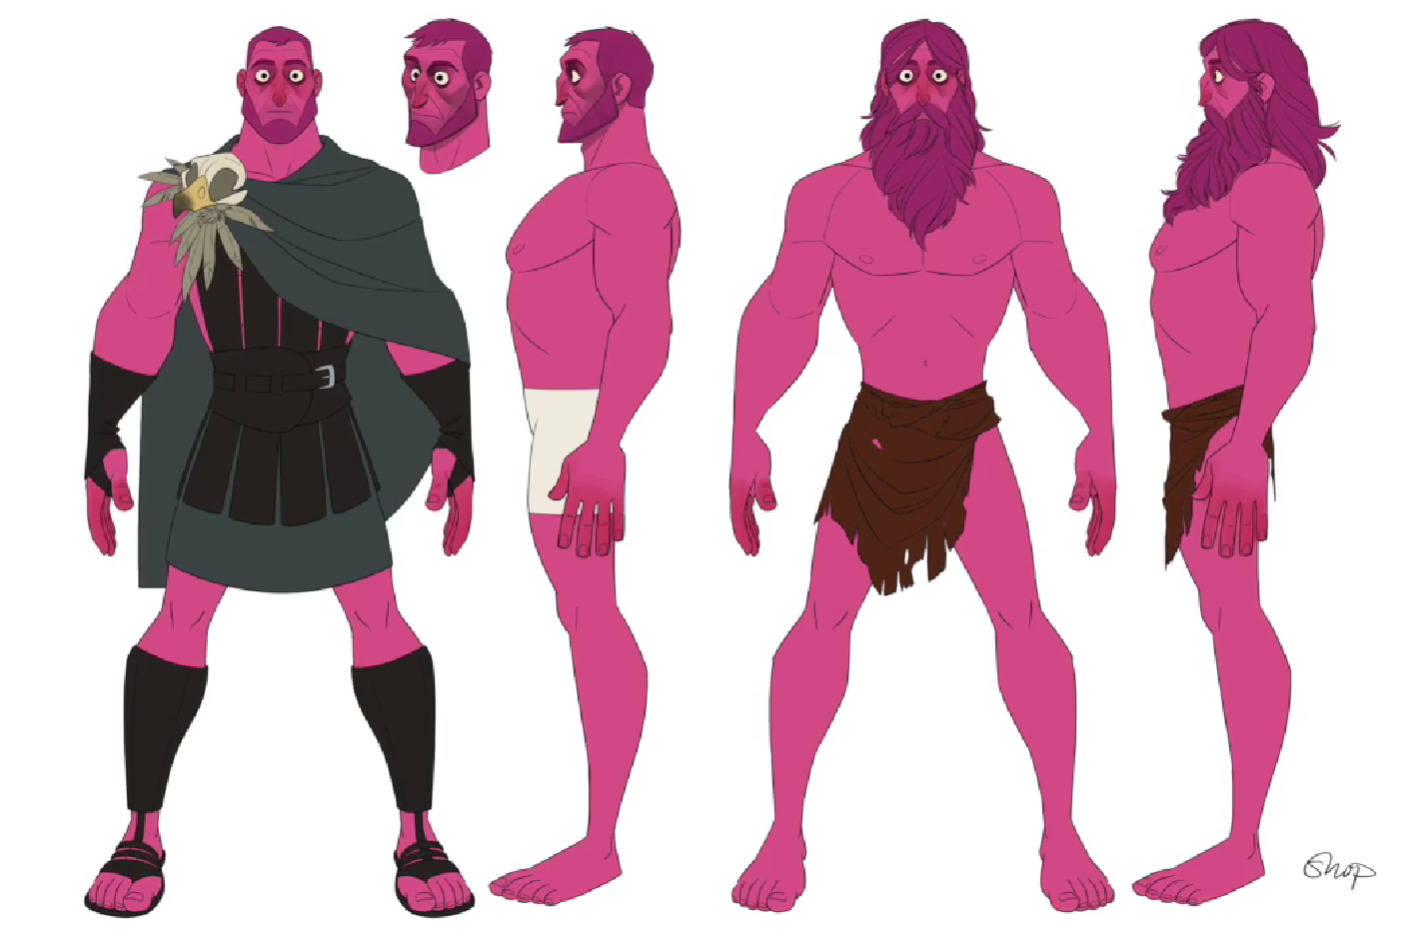 illustration of four burly pink men